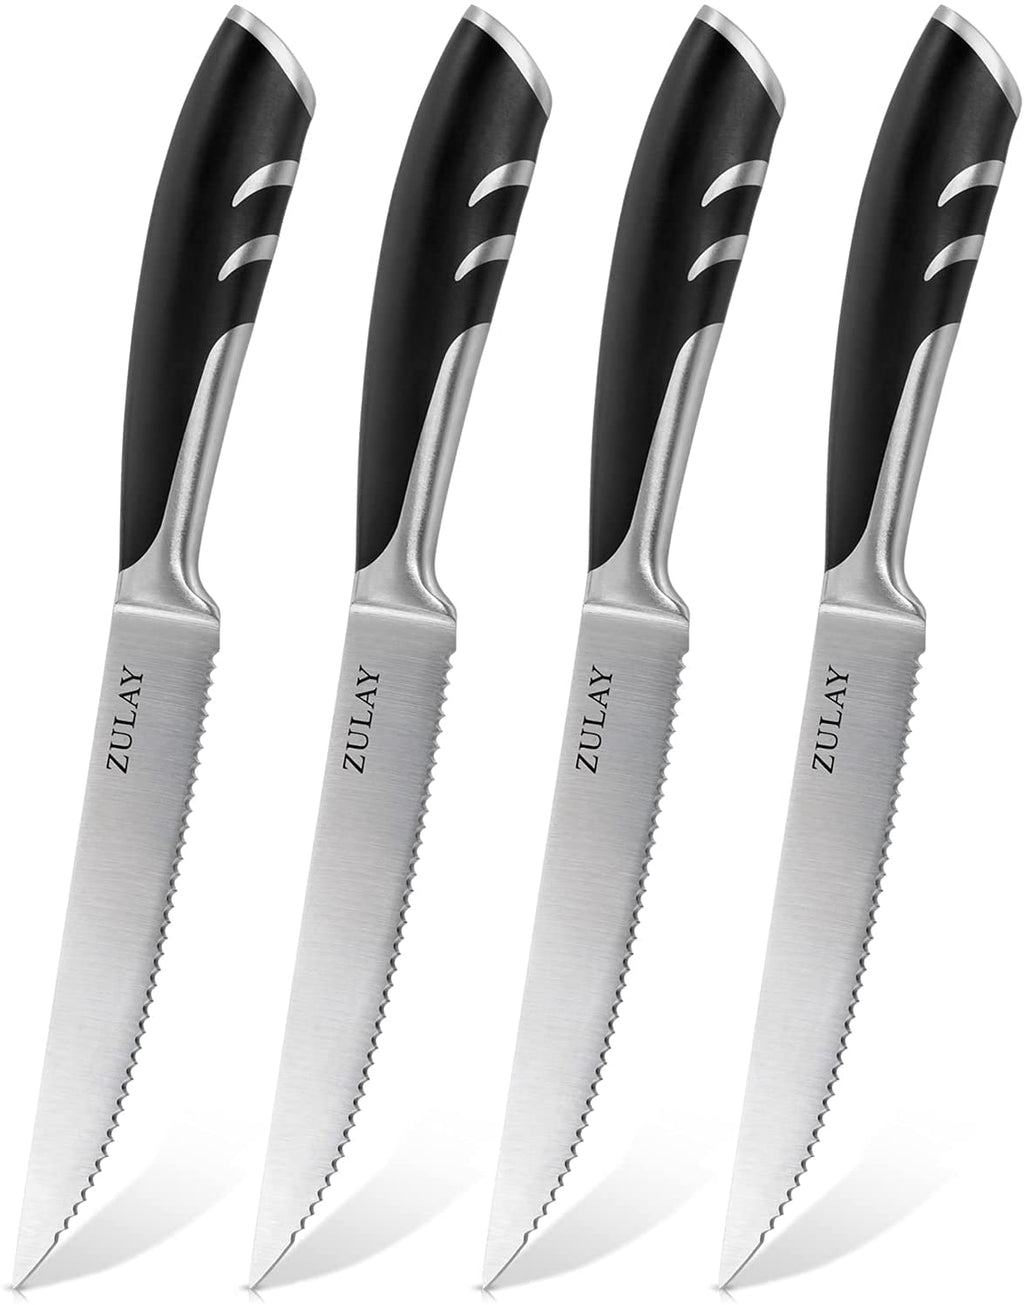 Deluxe Steak Knife Set H-10105 - Uline